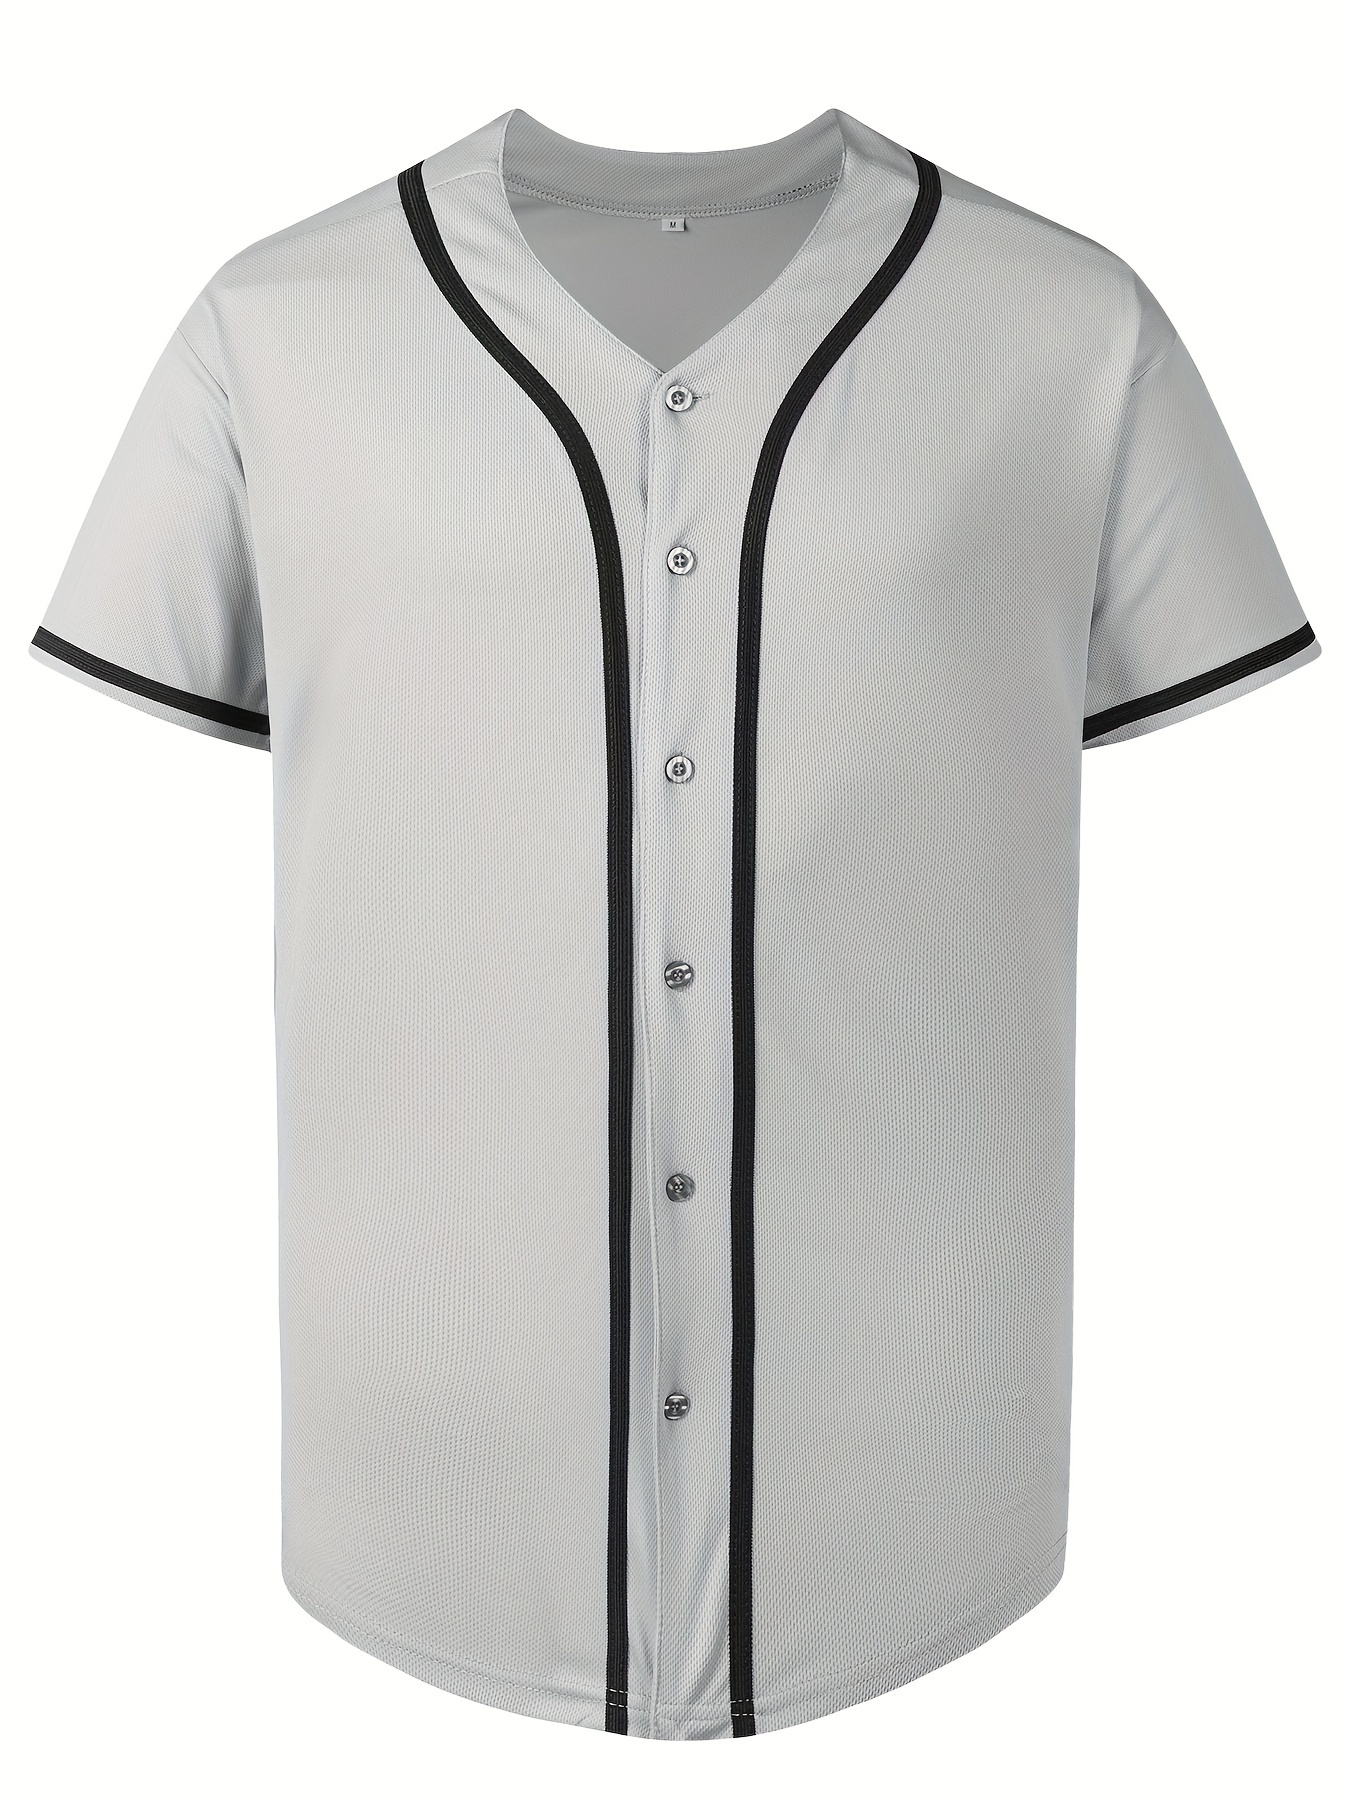 Fashion Blank Baseball Jersey Plain Button-Down Breathable Soft